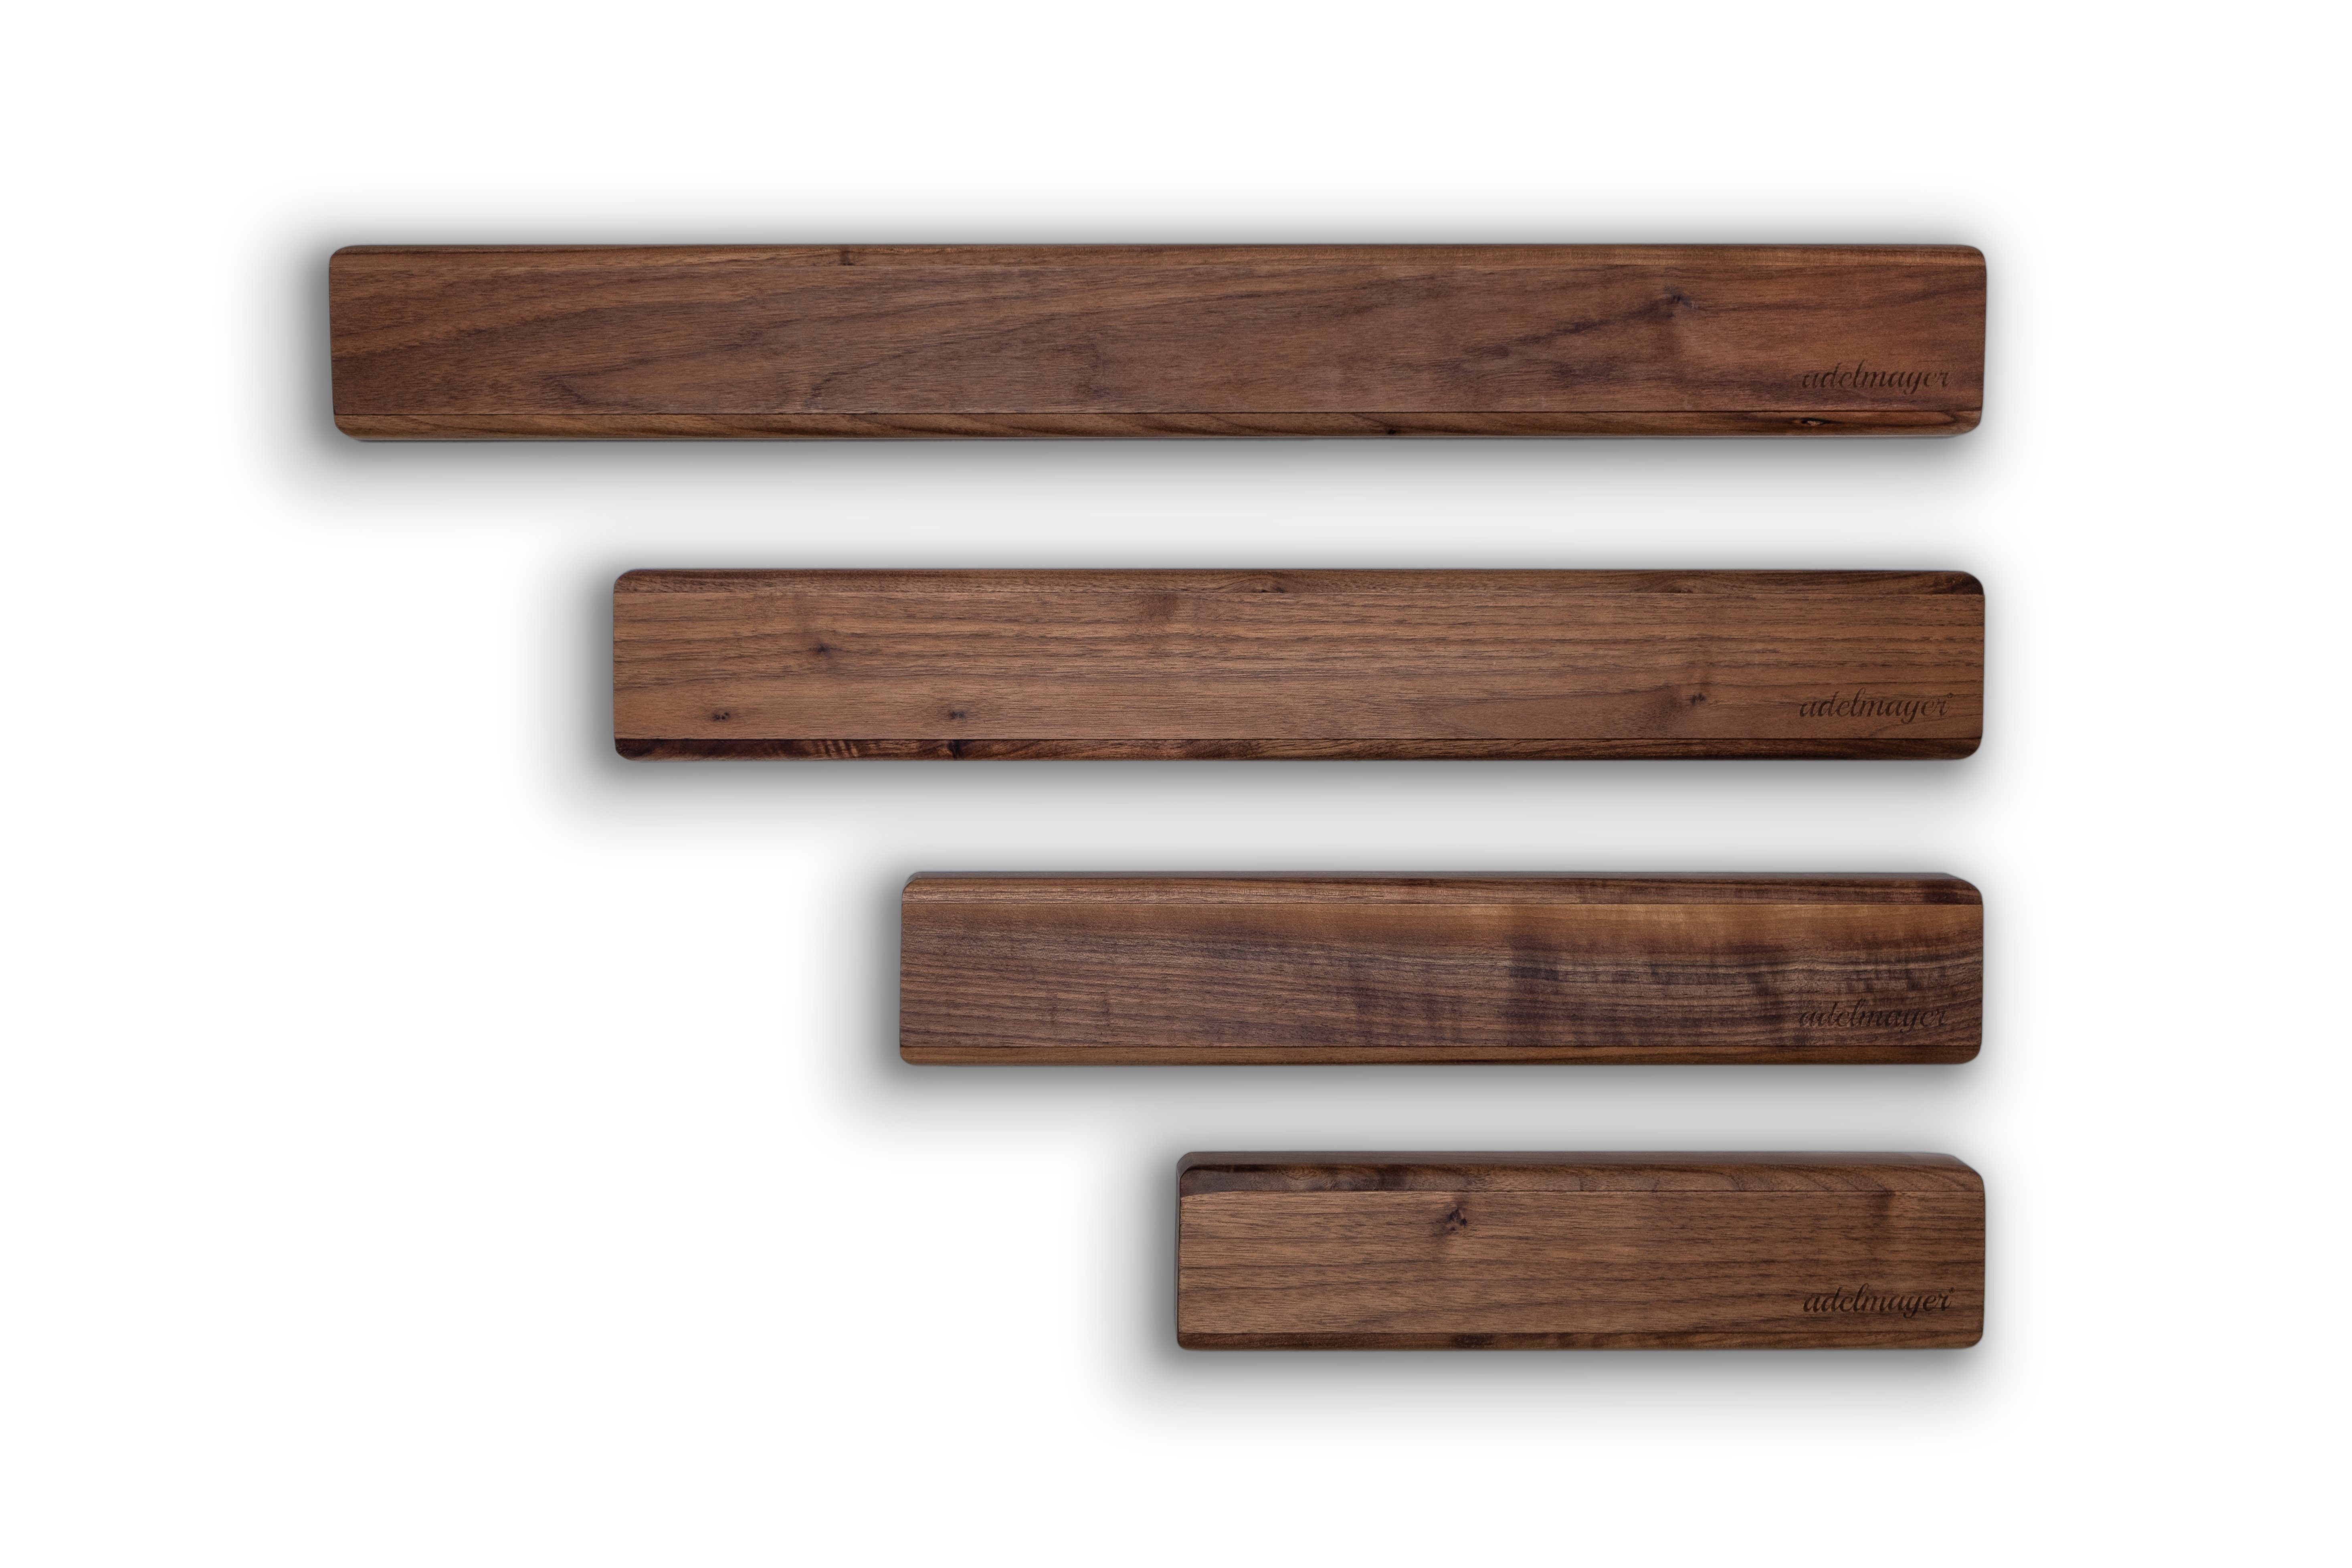 adelmayer Wand-Magnet Messer-Leiste aus verschiedenen hochwertigem Längen, in Walnuss-Holz